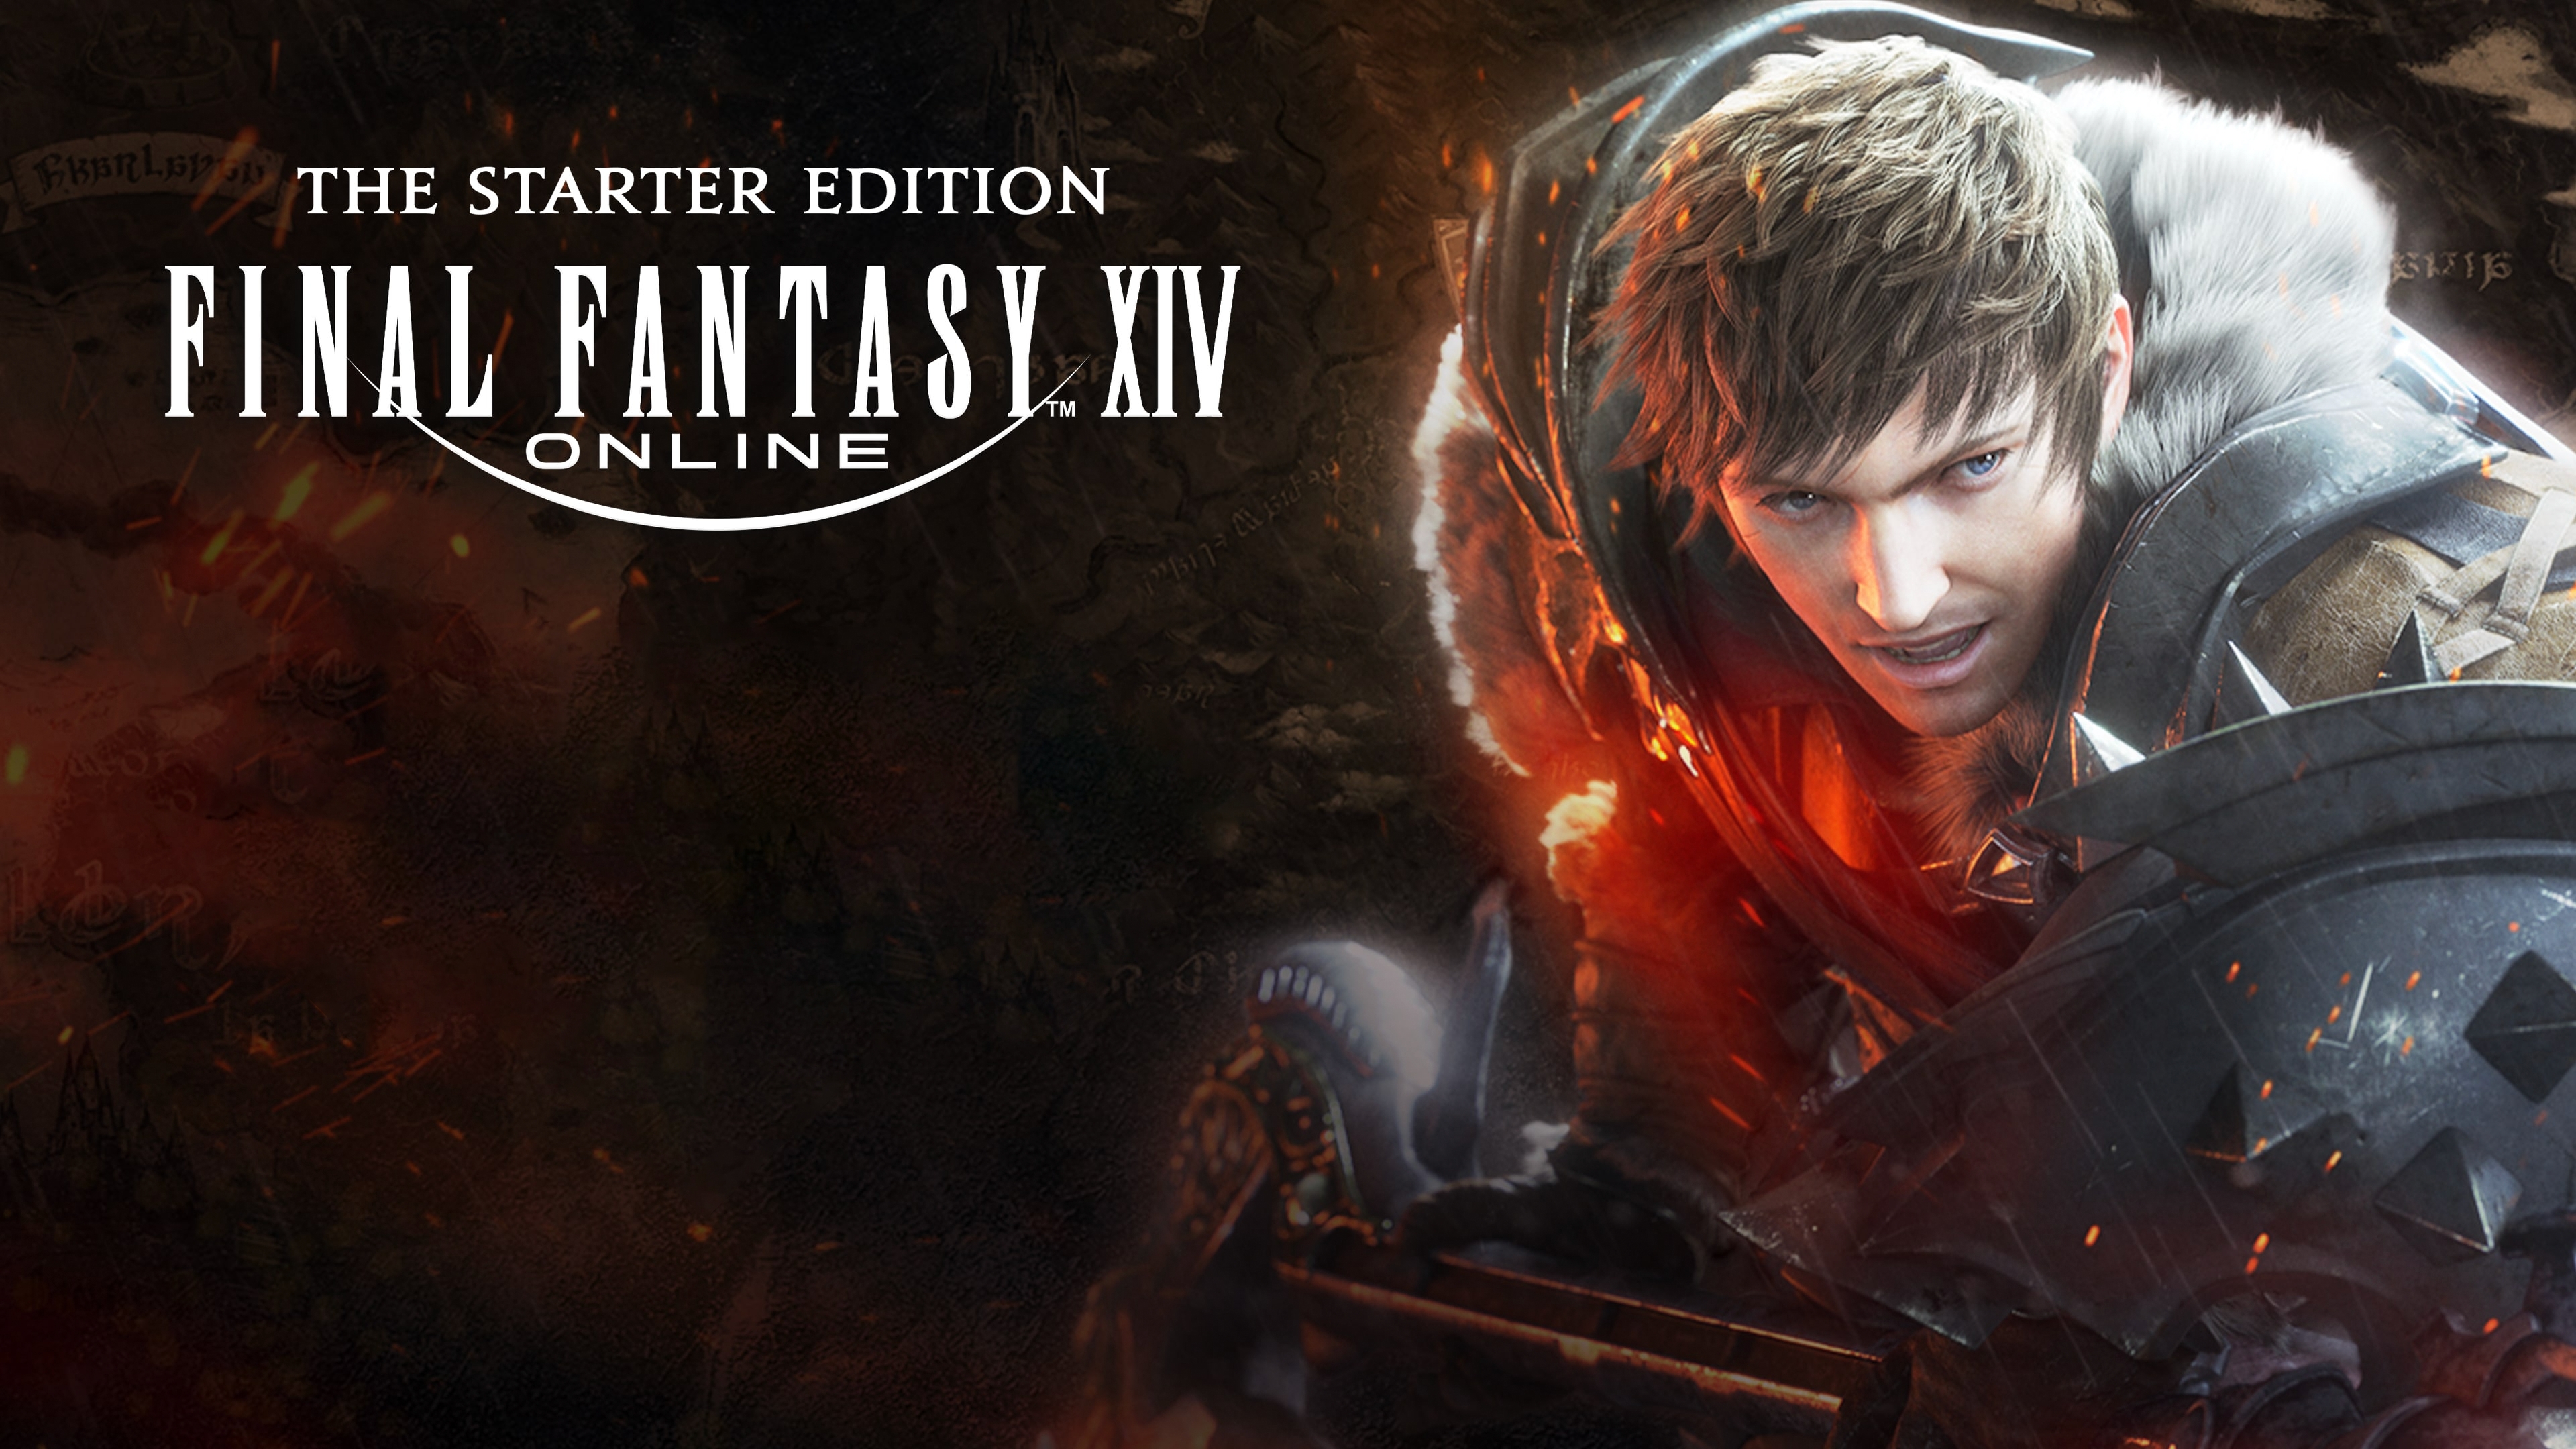 final fantasy 14 a realm reborn xbox one release date